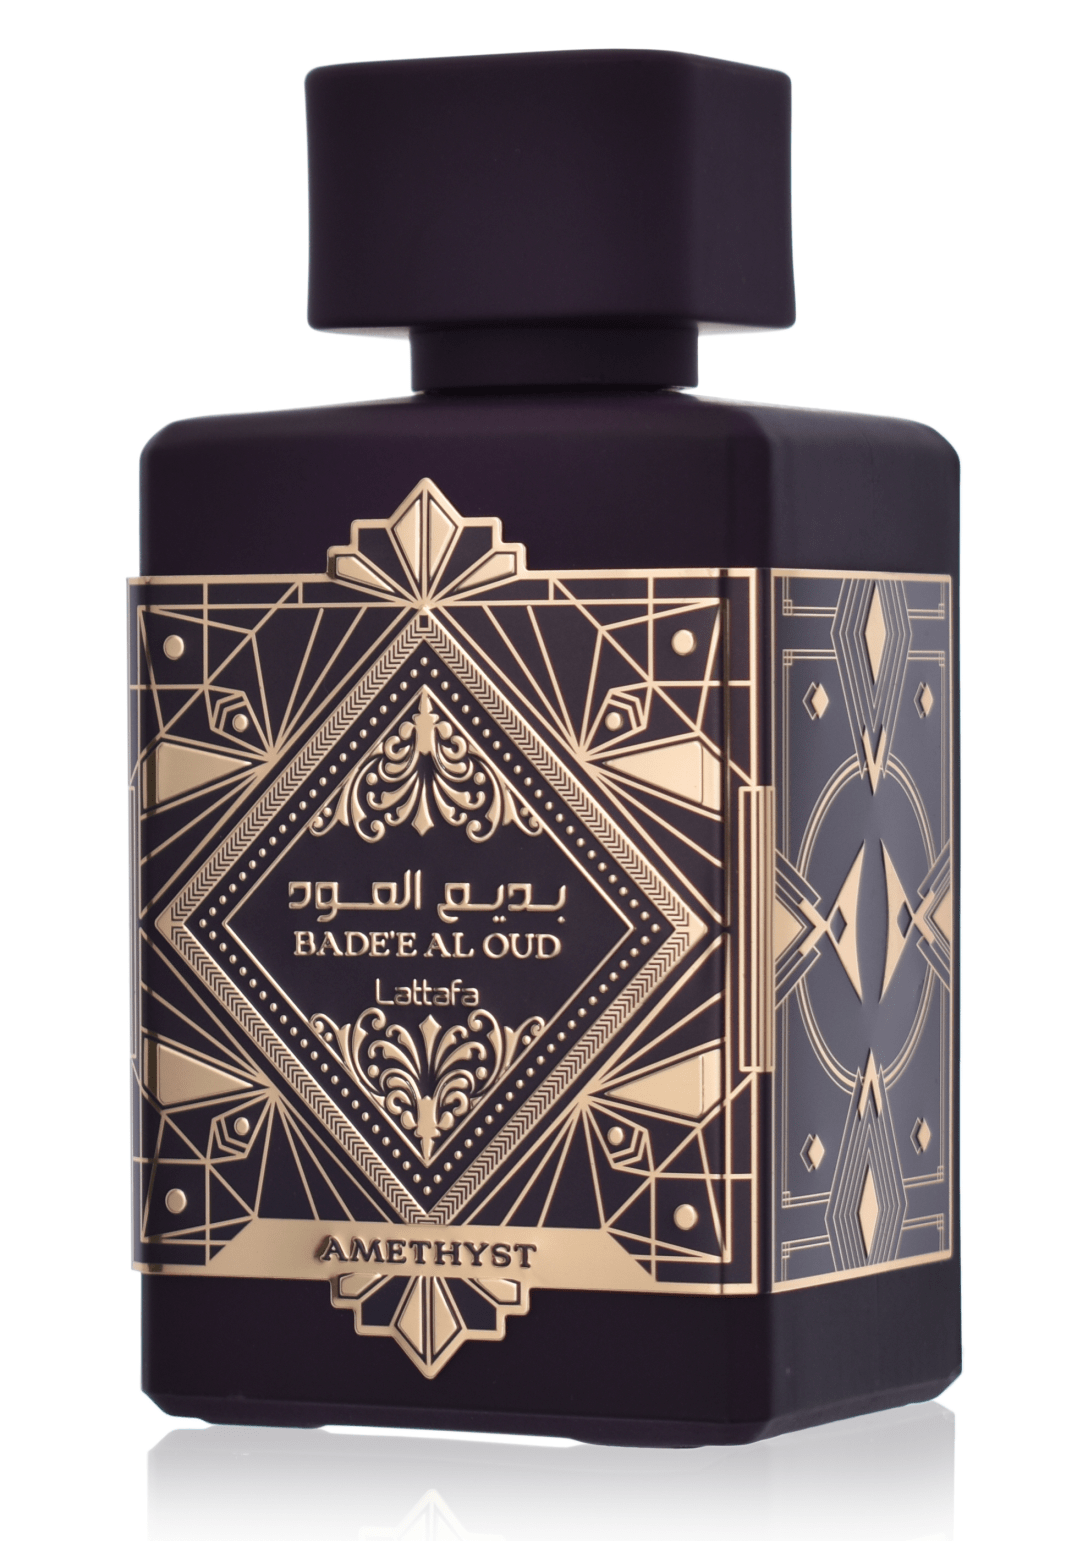 Lattafa Badee al Oud Amethyst 100 ml Eau de Parfum          